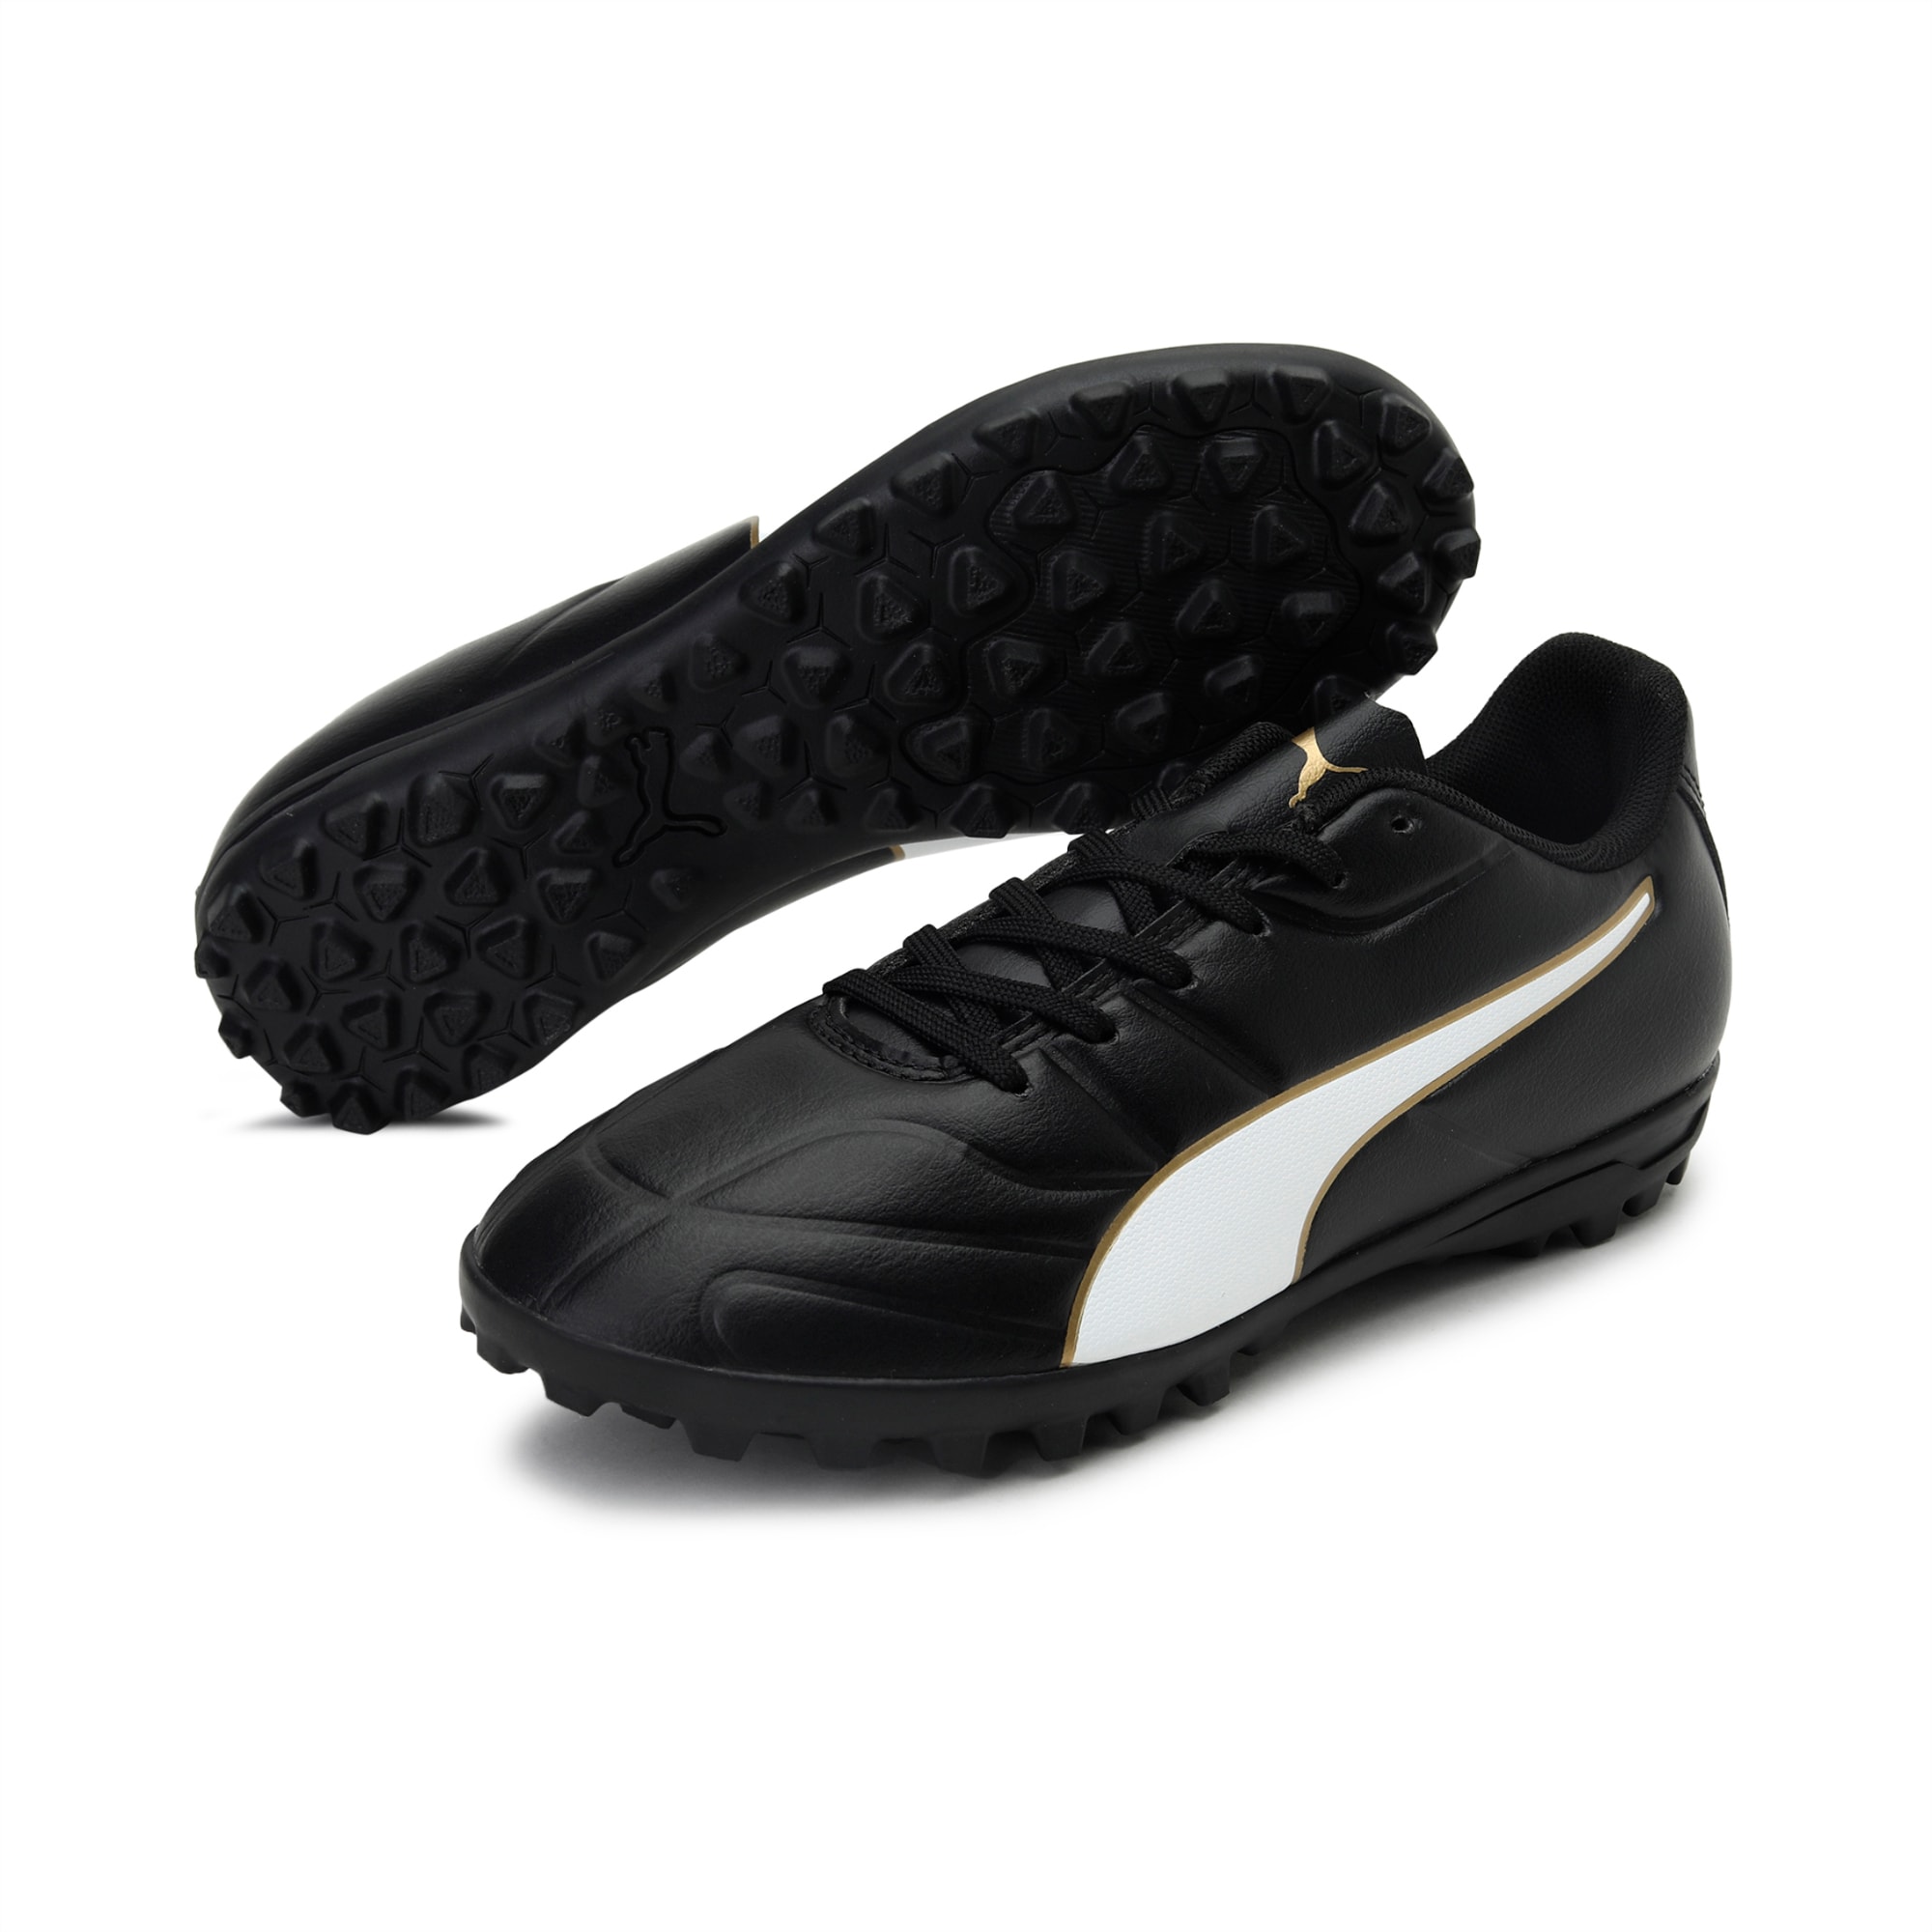 puma classico tt football shoe